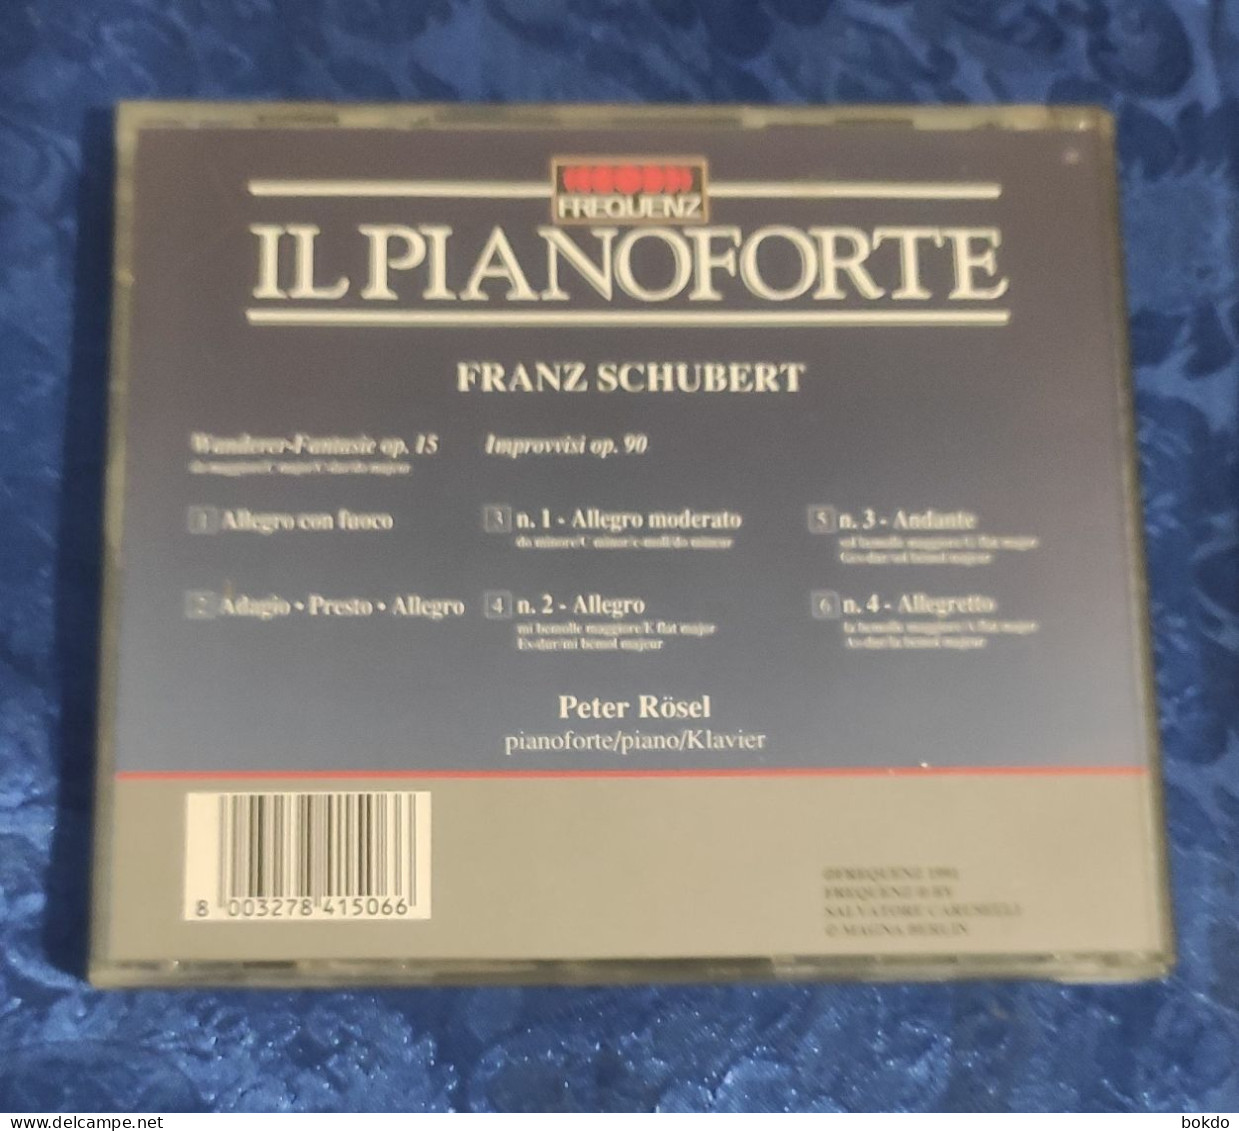 IL PIANOFORTE - Franz Schubert - Clásica